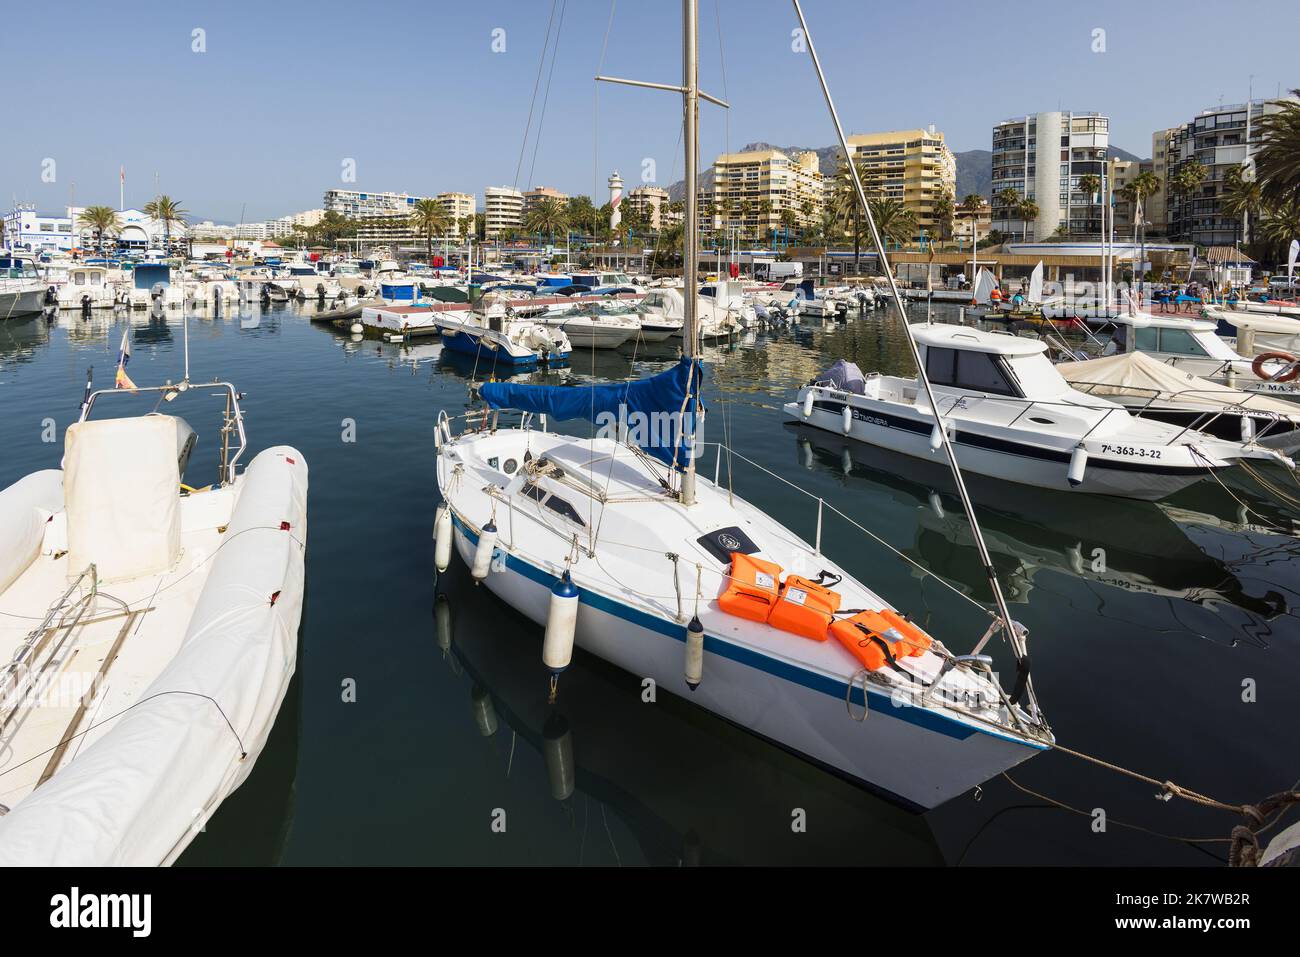 Puerto Deportivo oder Sporthafen an der Strandpromenade von Marbella. Marbella, Costa del Sol, Provinz Malaga, Andalusien, Südspanien Stockfoto